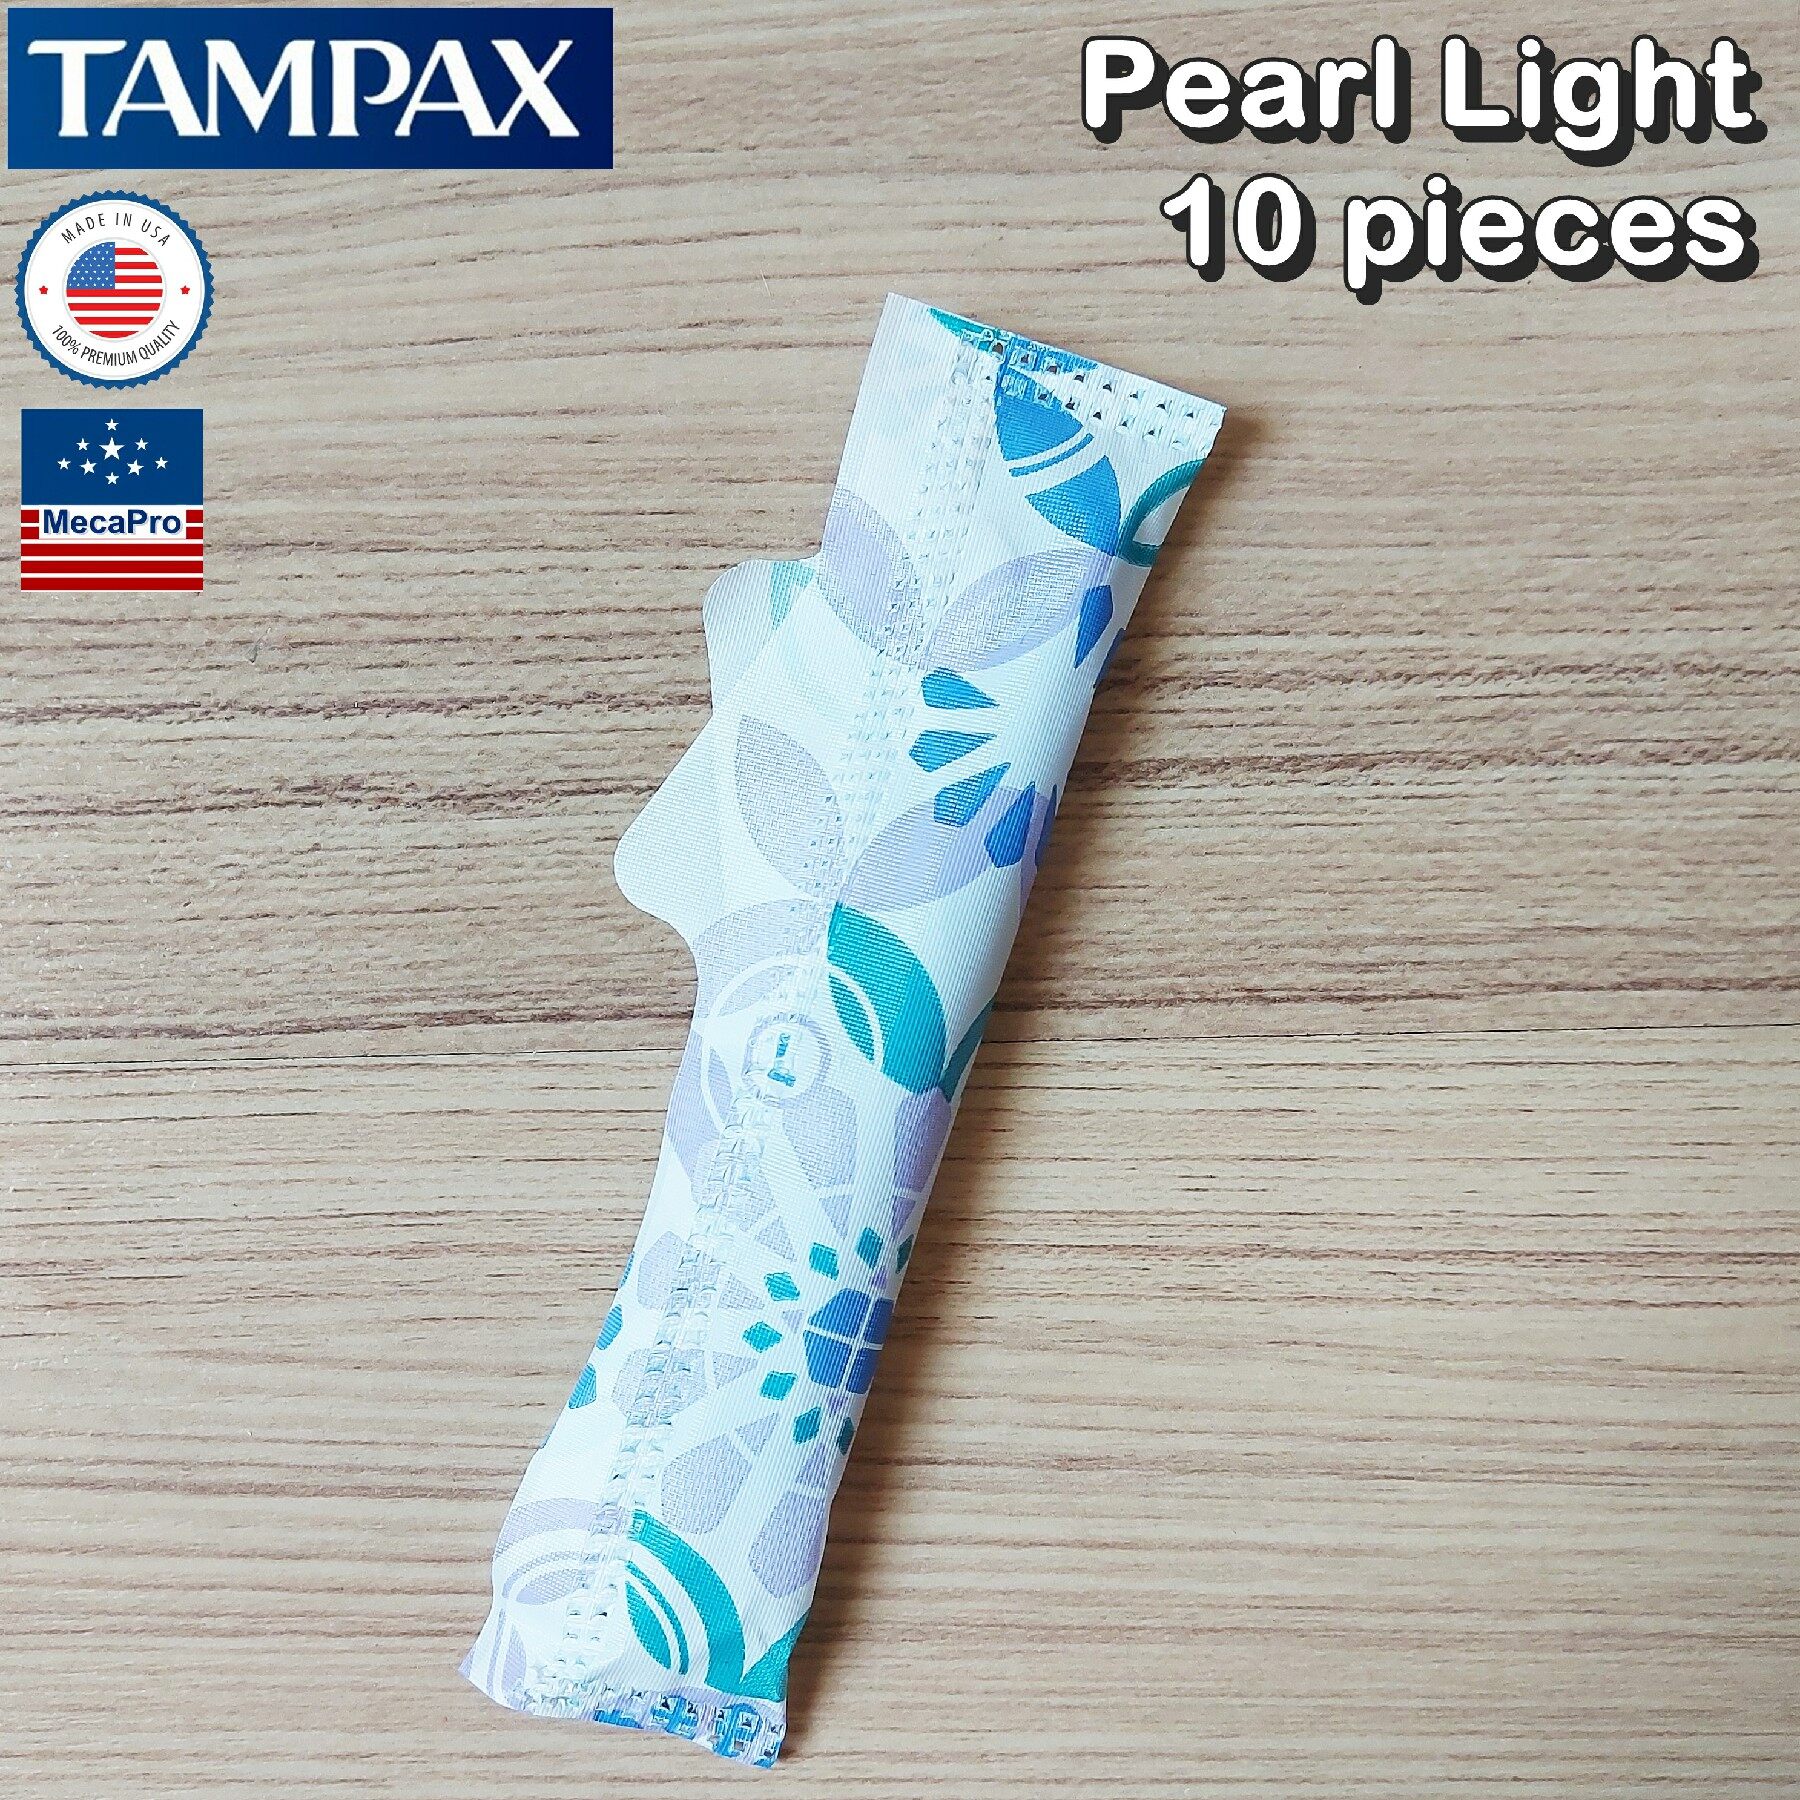 Tampax® Pearl Light Plastic Tampons Unscented 10 pieces ผ้าอนามัยแบบสอด 10 ชิ้น เหมาะกับวันมาน้อย สูตรไร้กลิ่น